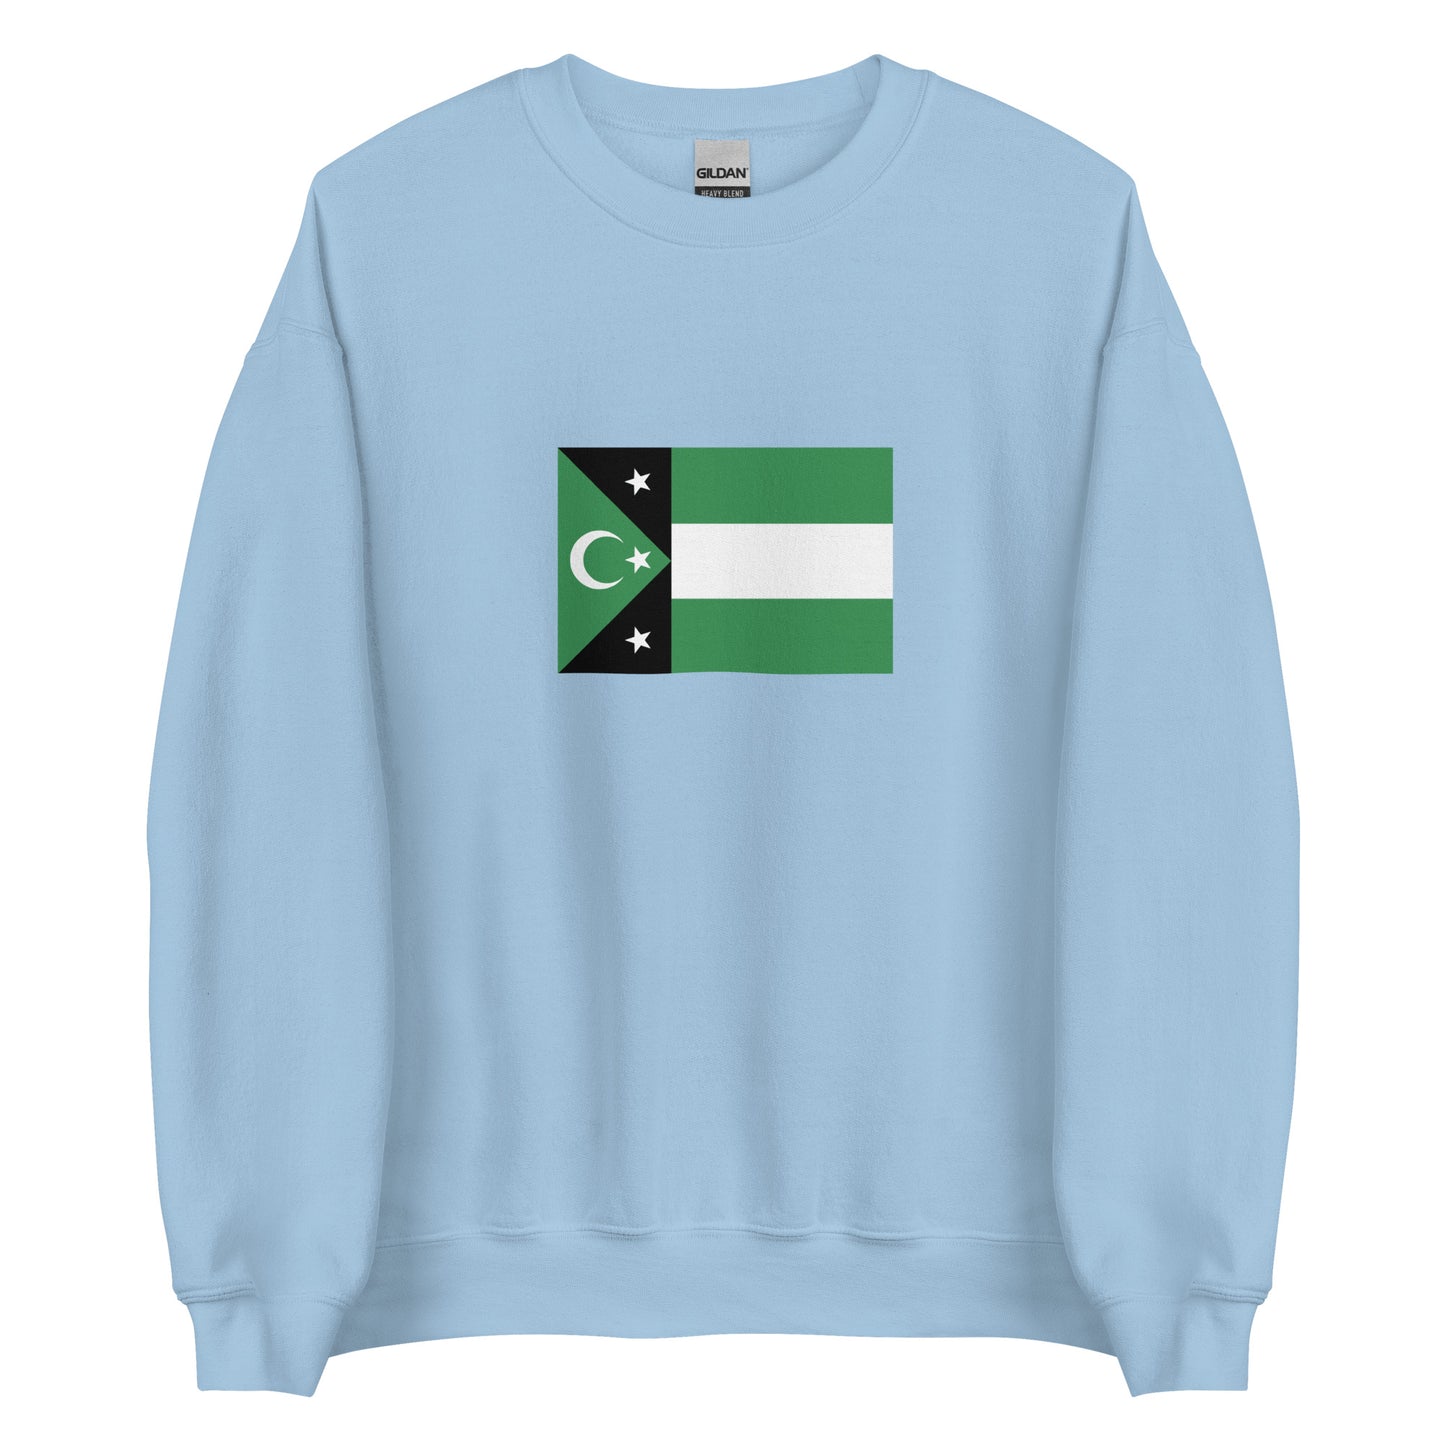 Greece - Turks of Western Thrace | Ethnic Greece Flag Interactive Sweatshirt